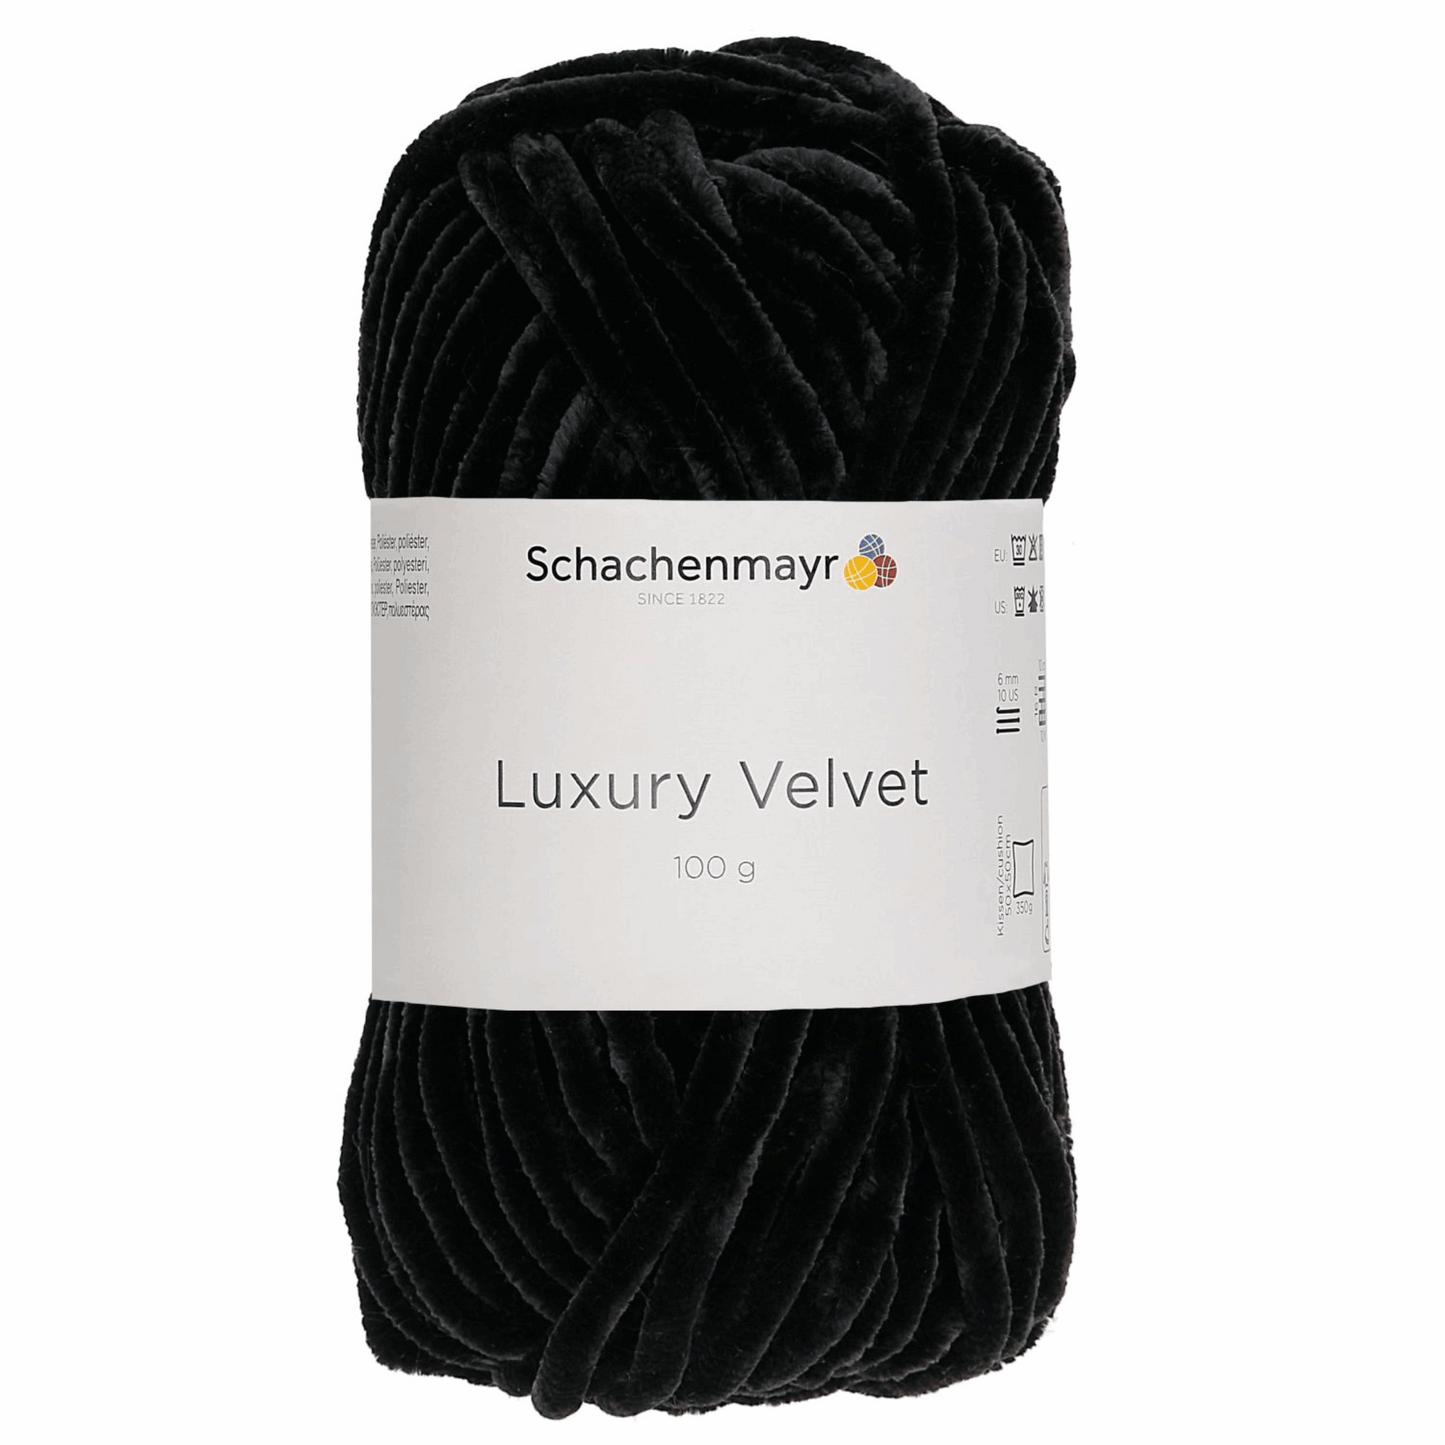 Schachenmayr Luxury Velvet 100g, 90592, Farbe black sheep 99